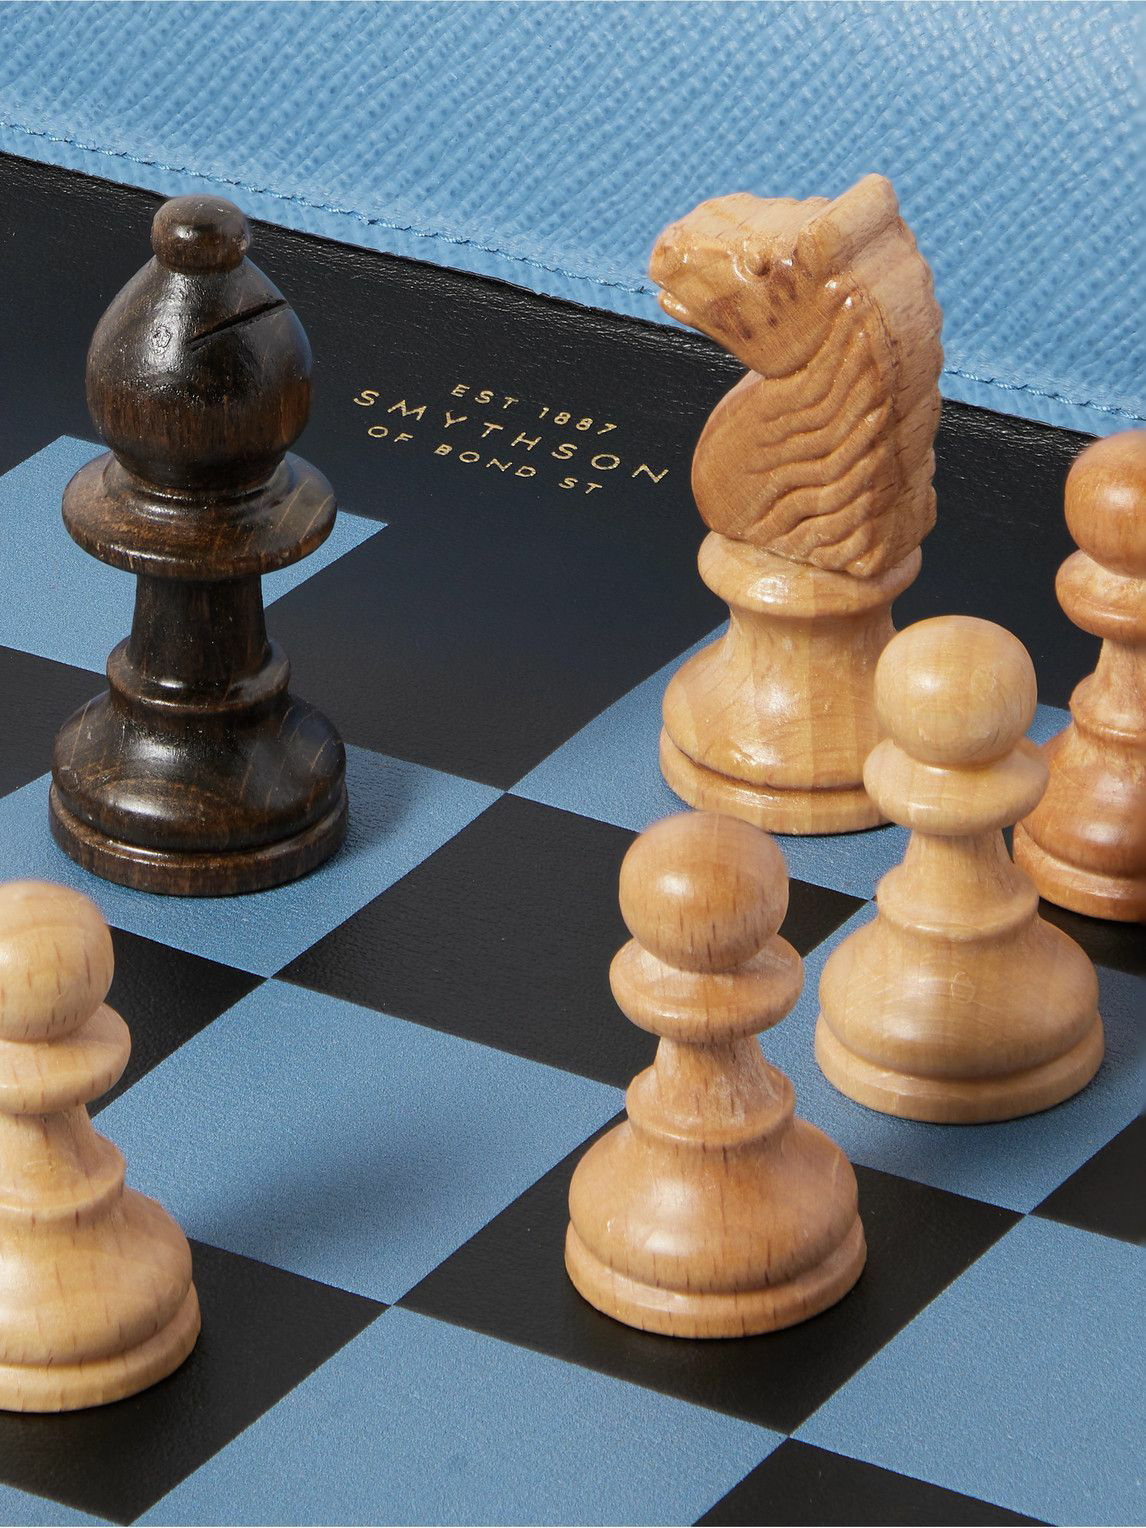 Smythson black Leather Roll-Up Chess Set